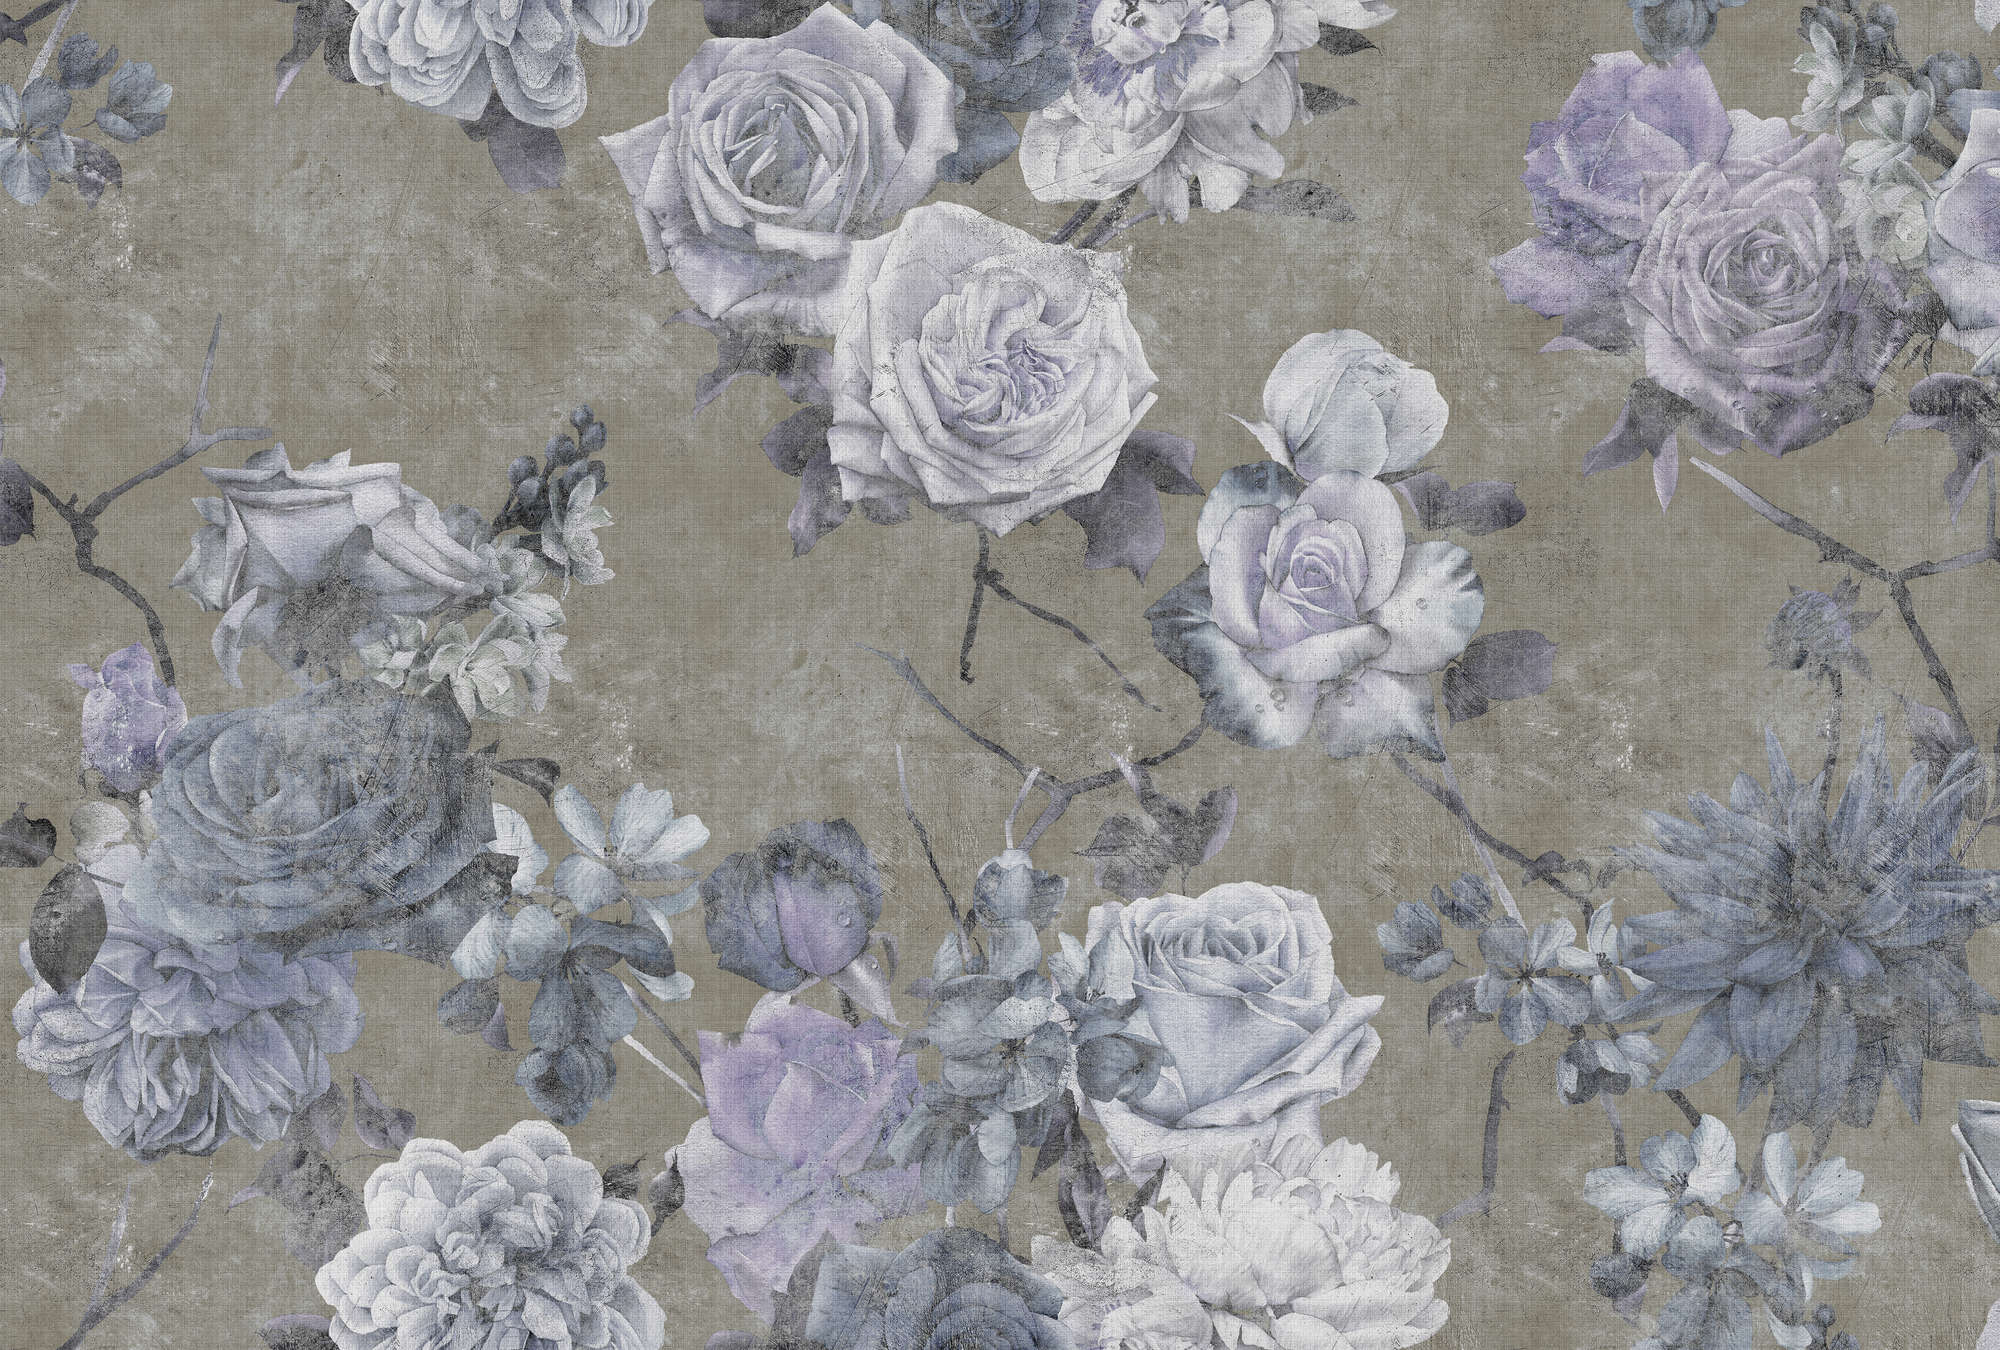             Sleeping Beauty 1 - Carta da parati con struttura in lino naturale fiori di rosa in look used - blu, tortora | struttura in tessuto non tessuto
        